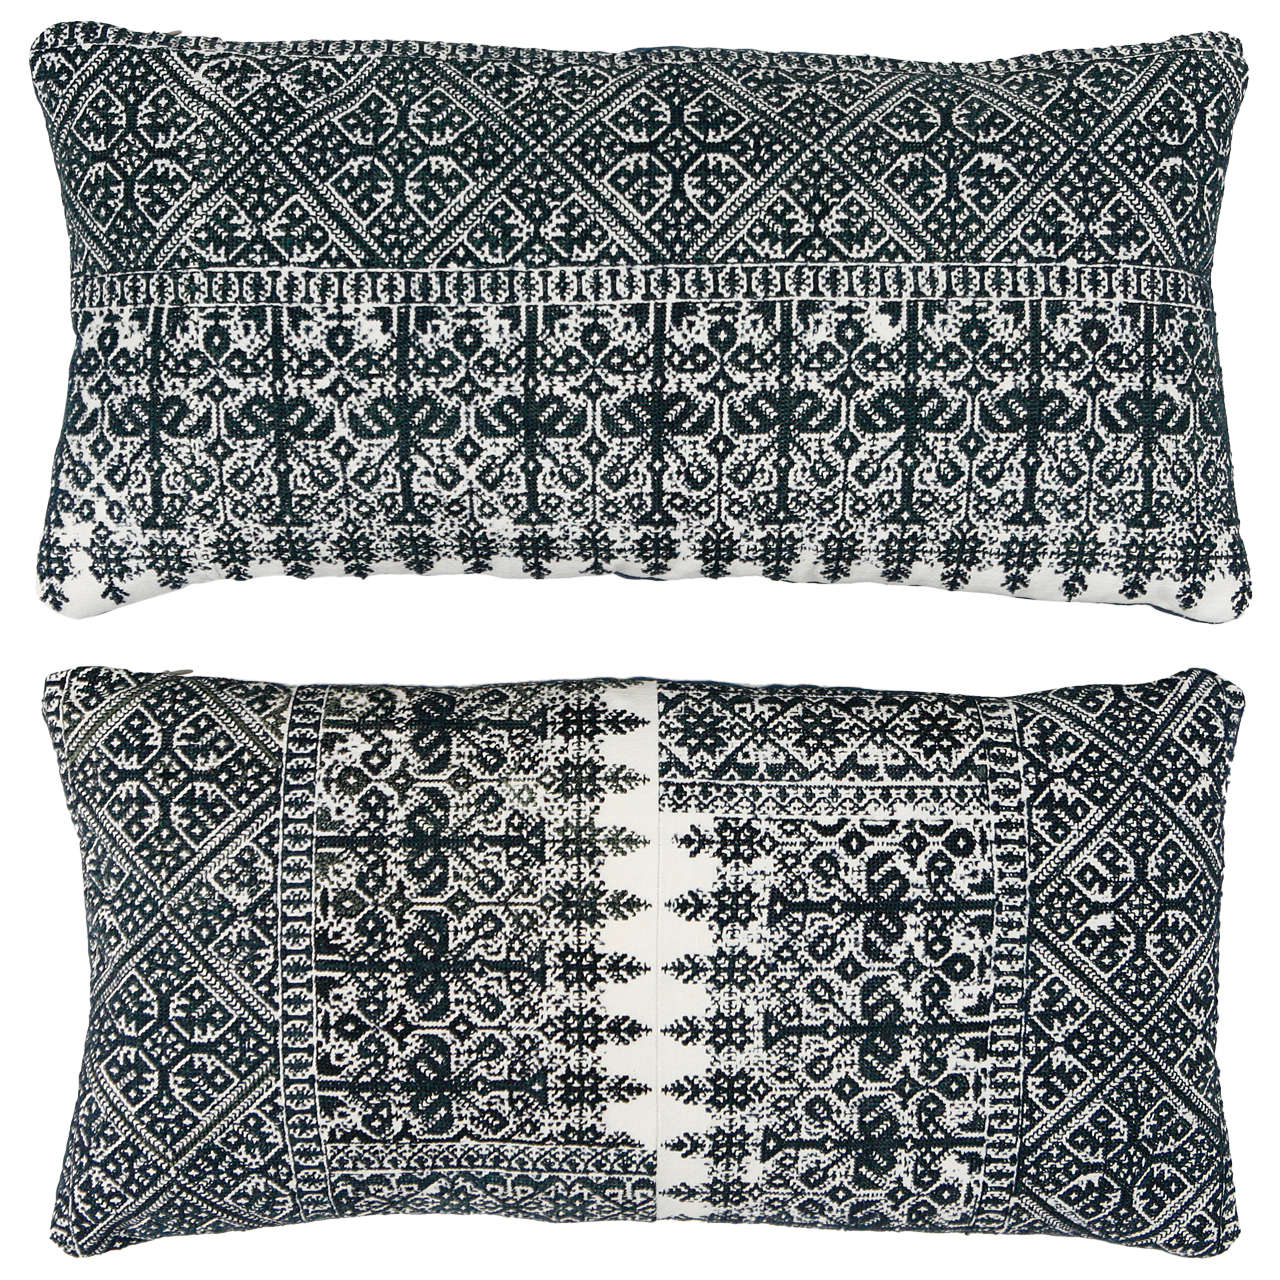 Moroccan Fez Embroidery Pillows